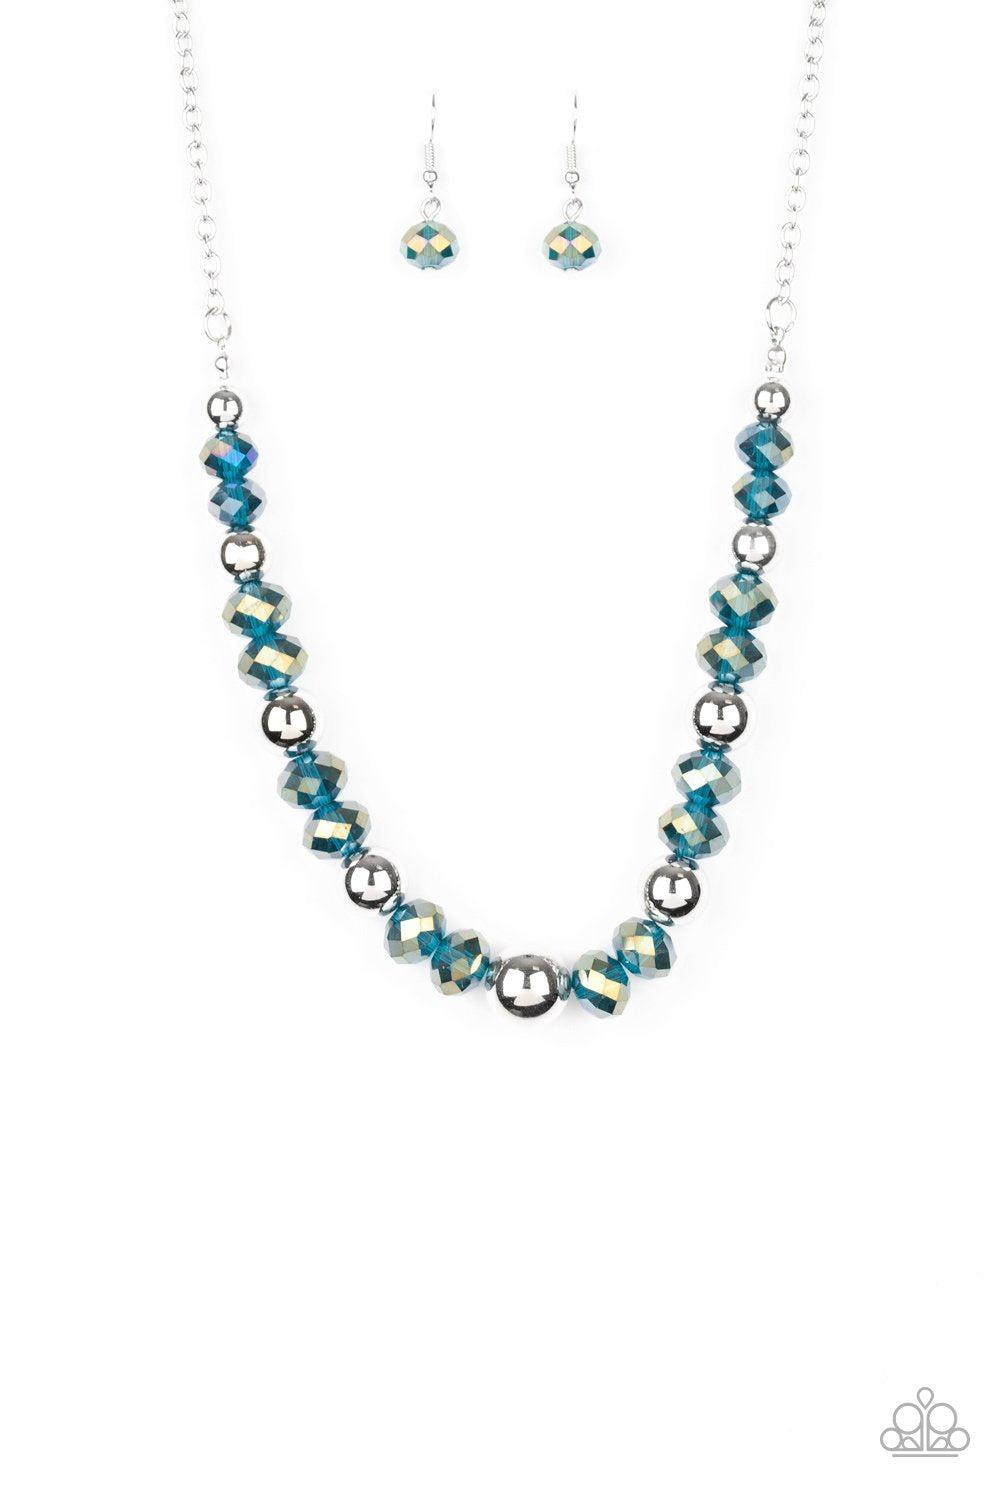 Jewel Jam Metallic Blue Oil Spill Necklace - Paparazzi Accessories-CarasShop.com - $5 Jewelry by Cara Jewels